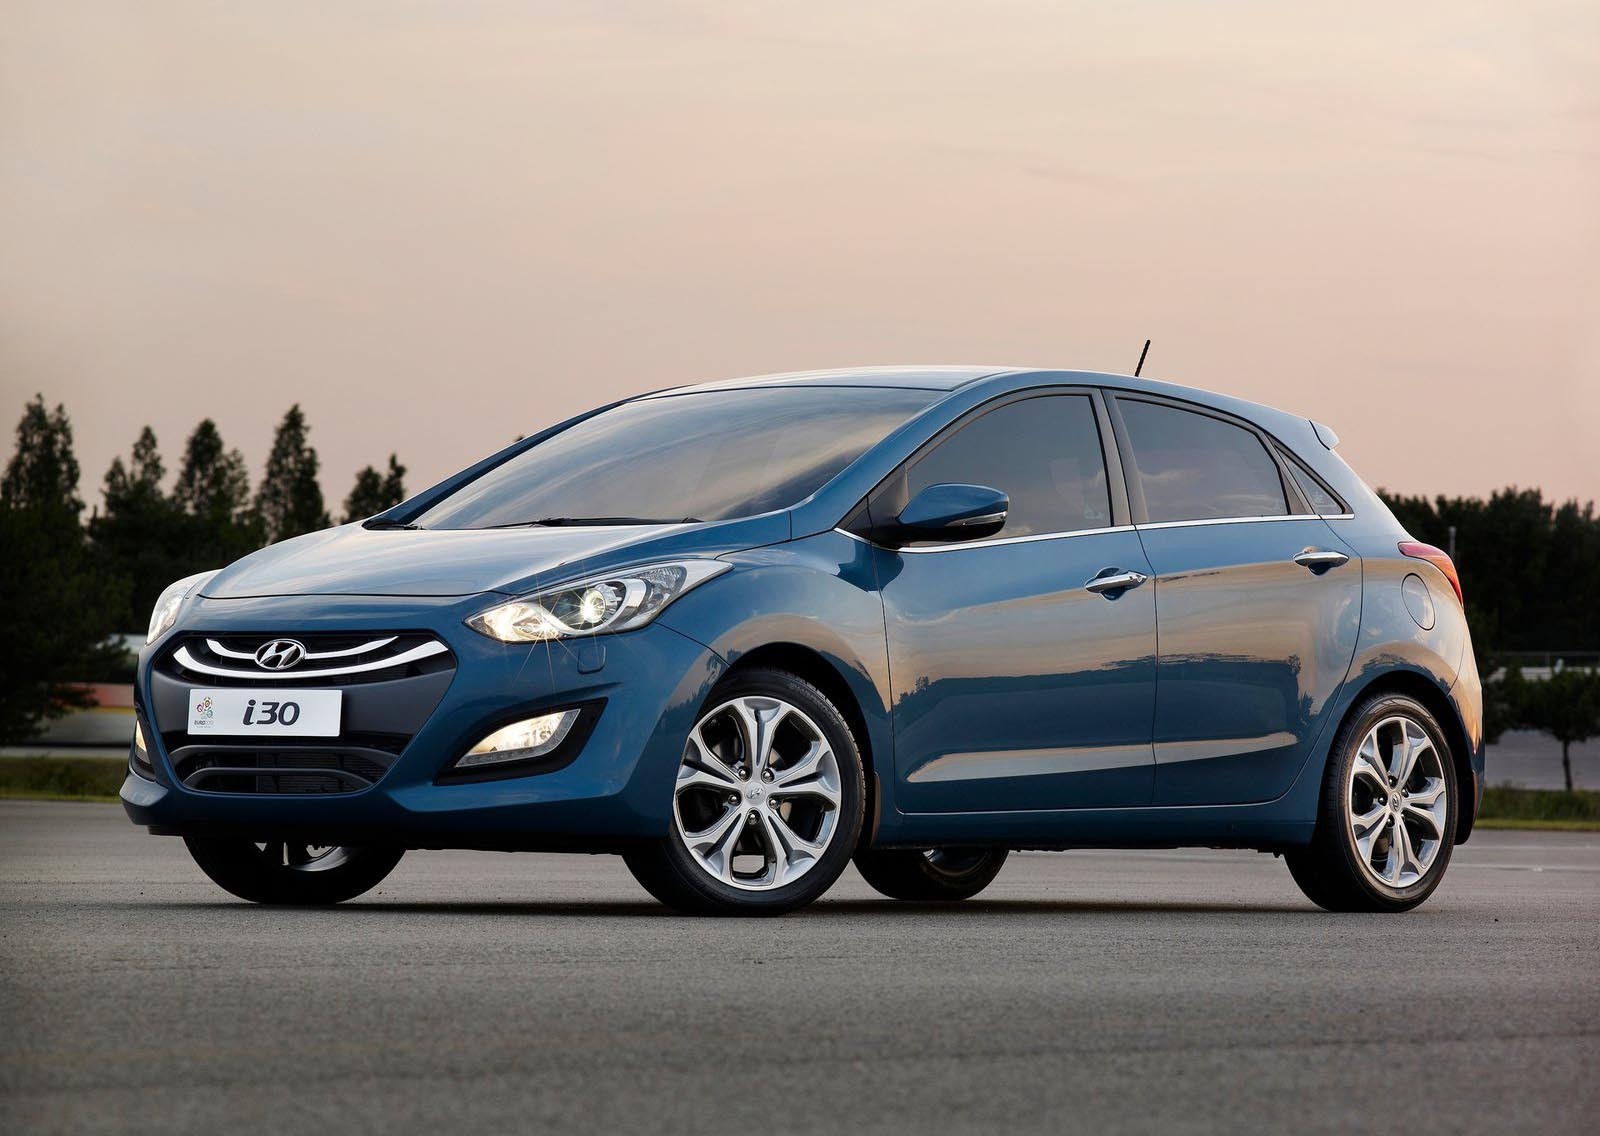 Noul Hyundai i30 are un stil fluid si promite sa se evidentieze clar in clasa compacta